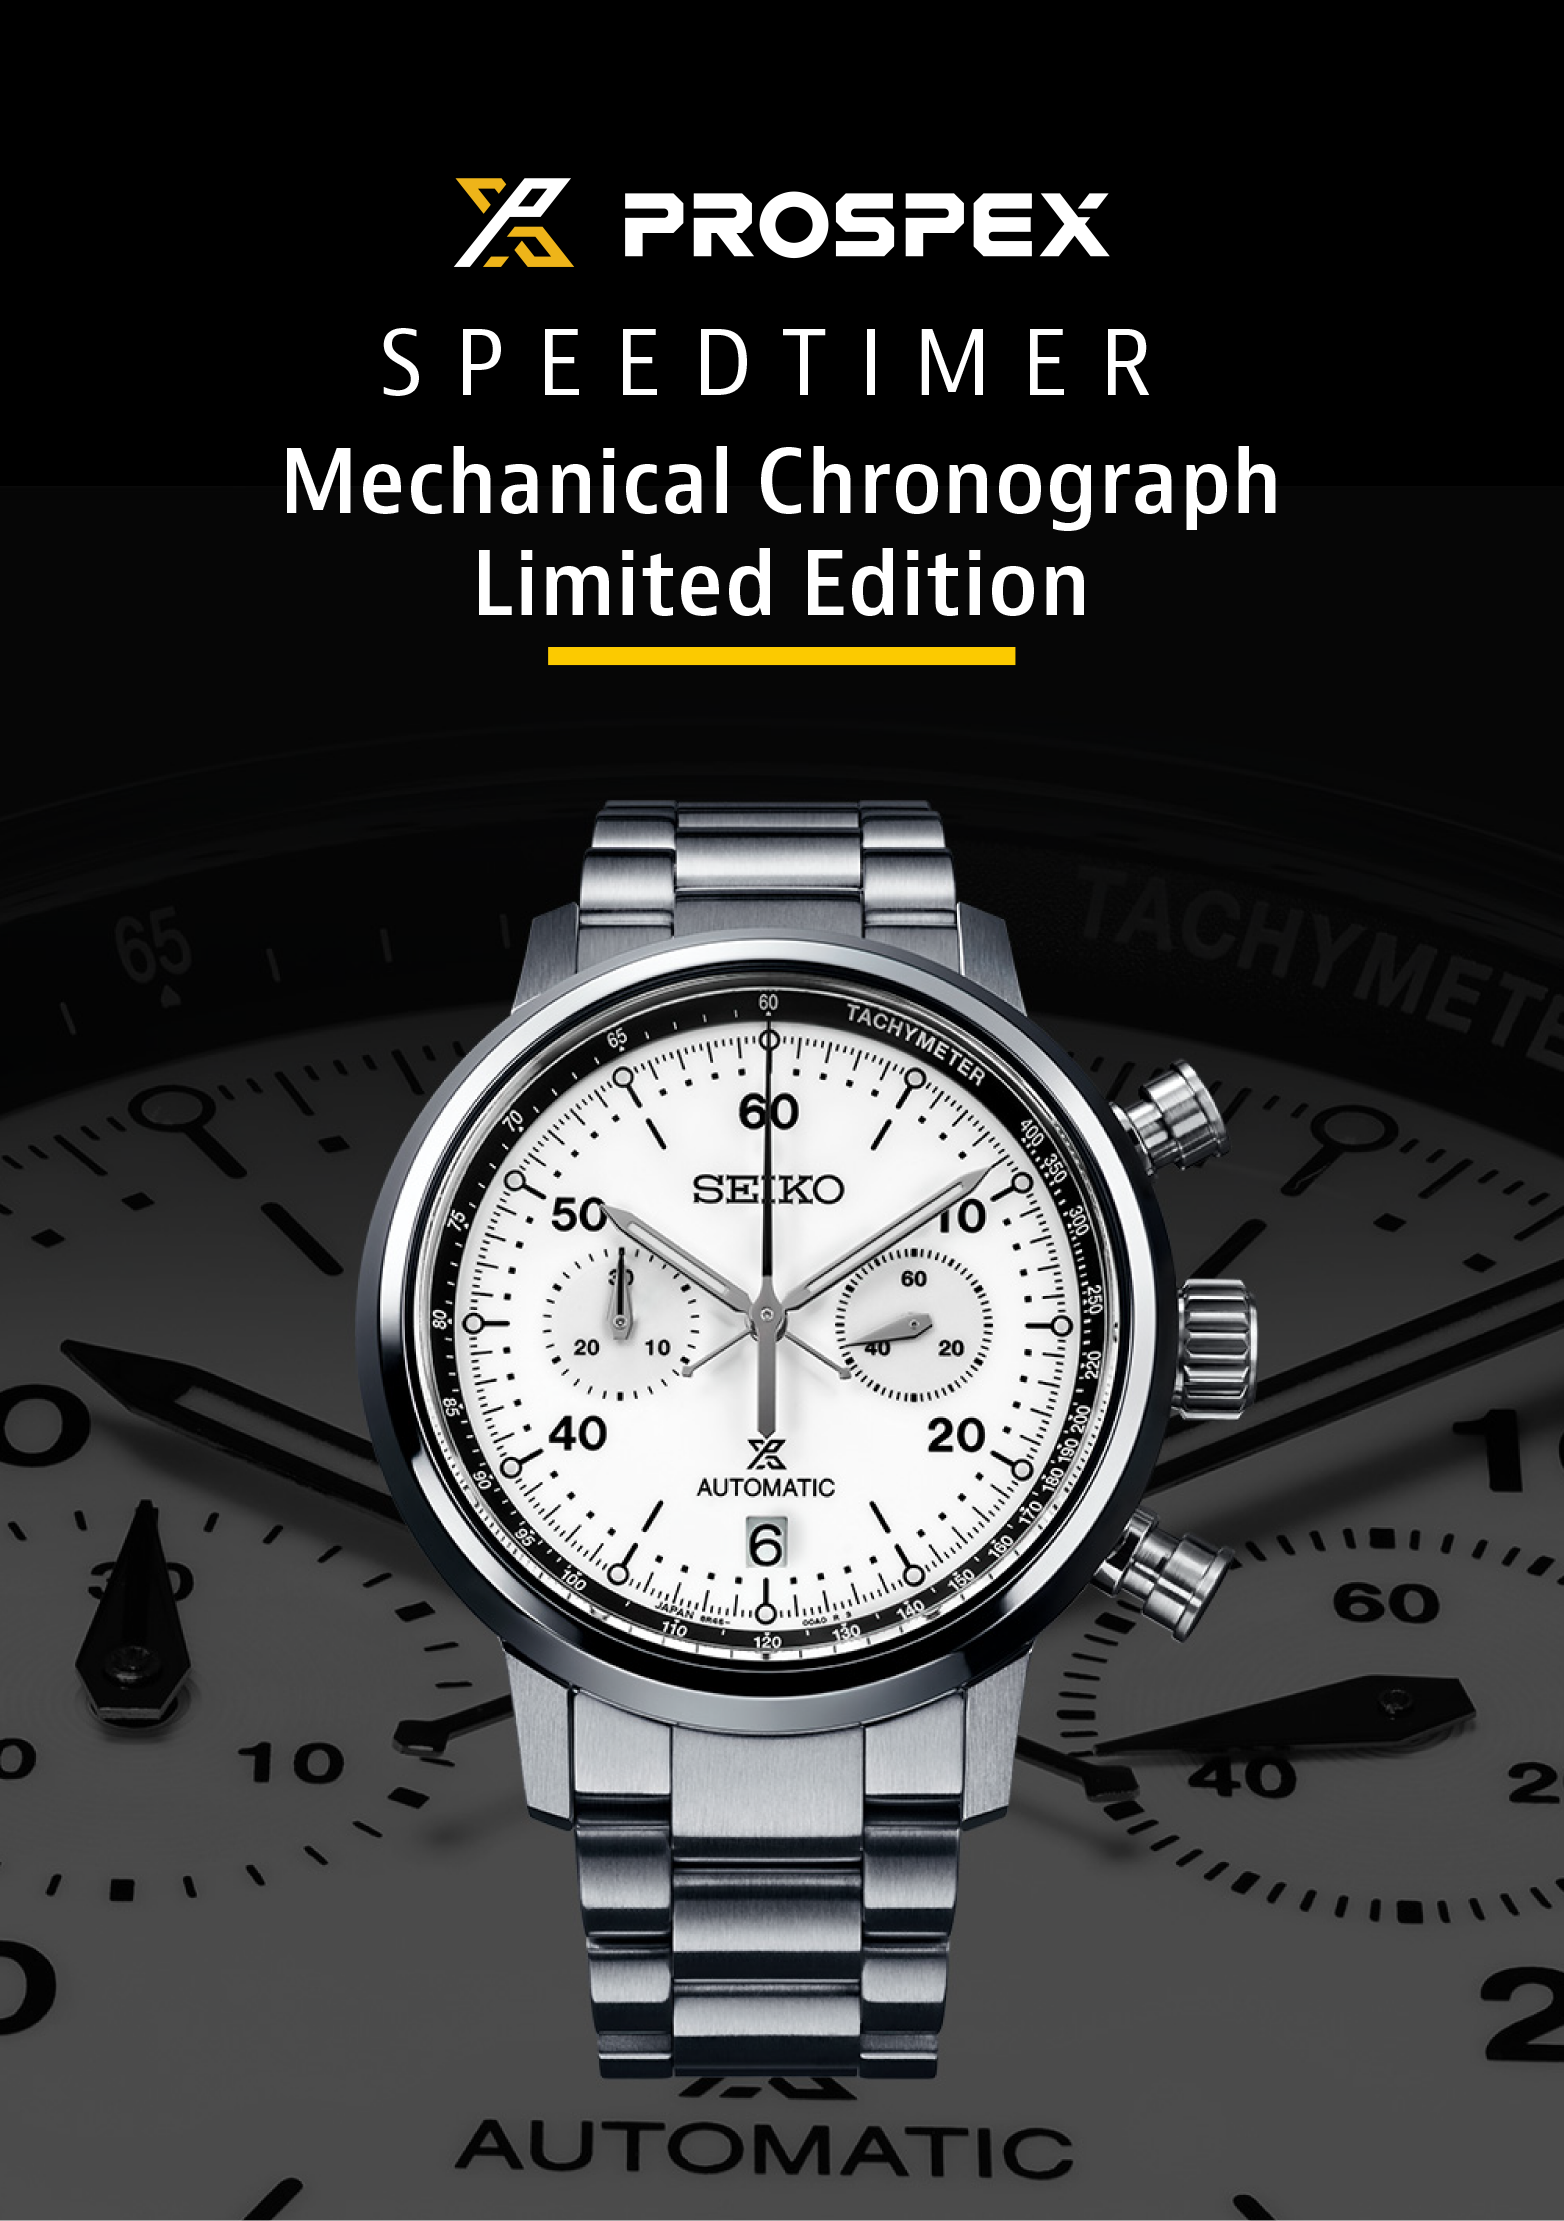 Speedtimer Mechanical Chronograph Limited Edition